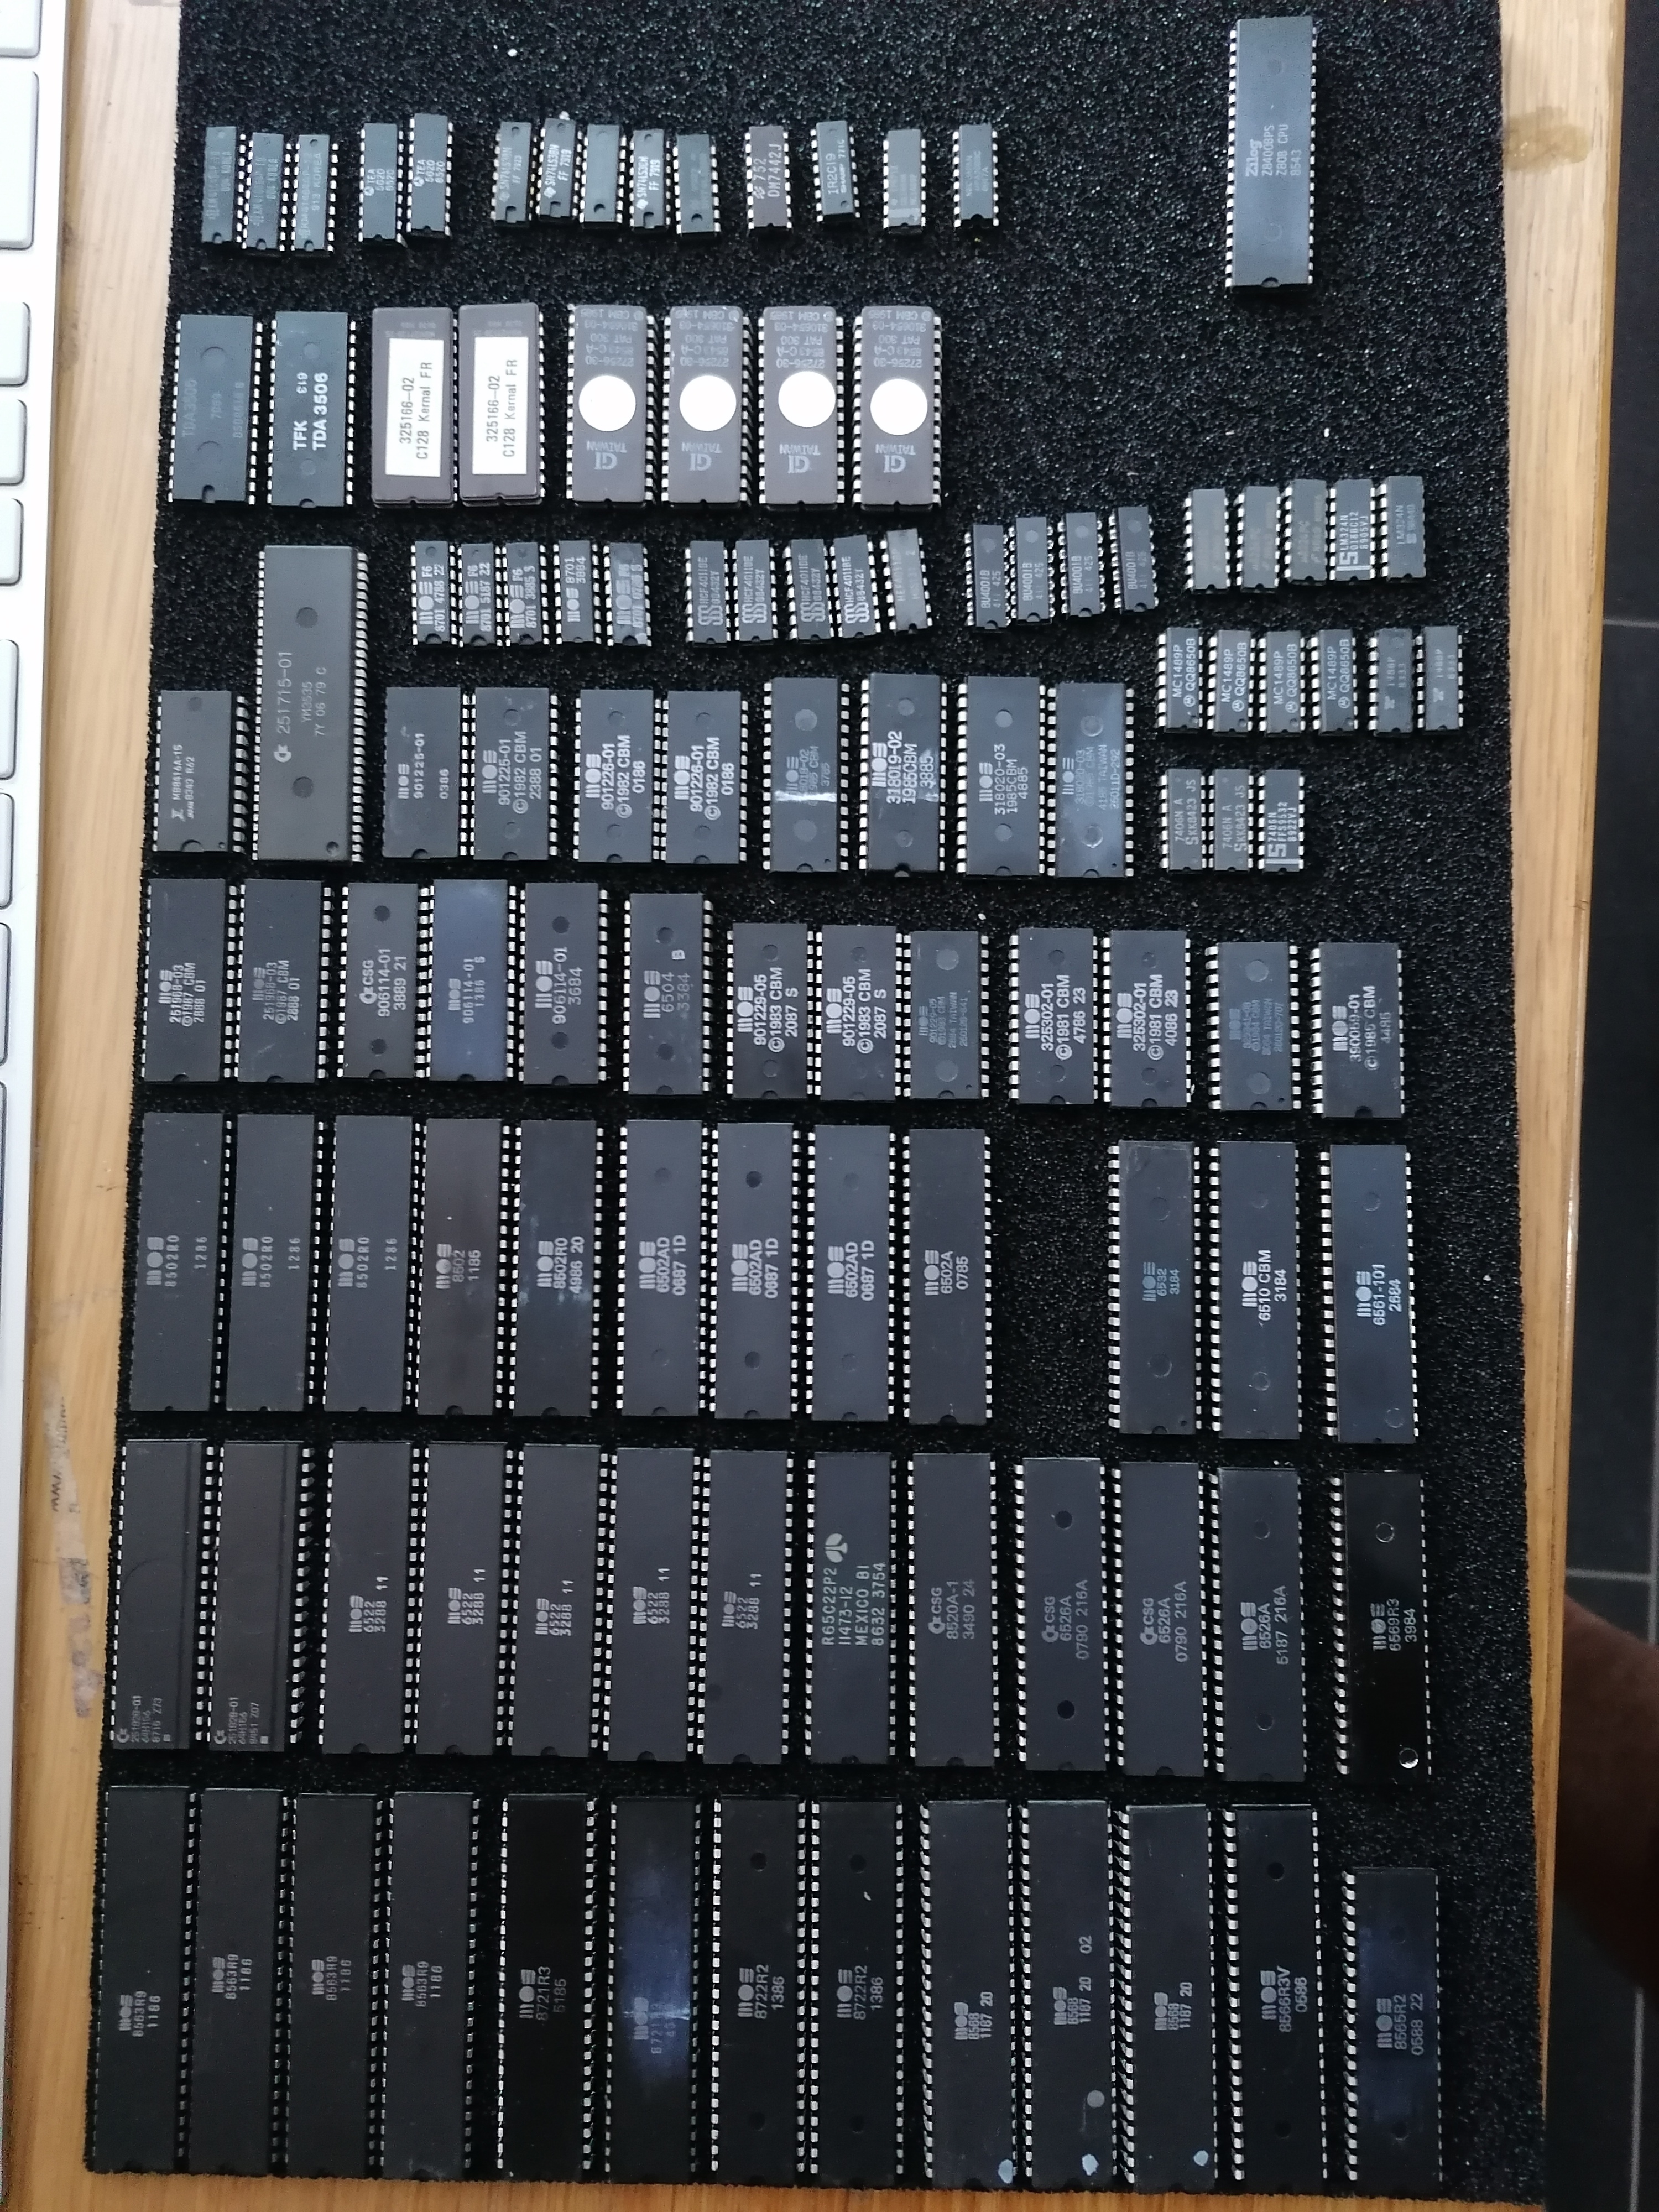 Commodore 64-128 Chips.jpg